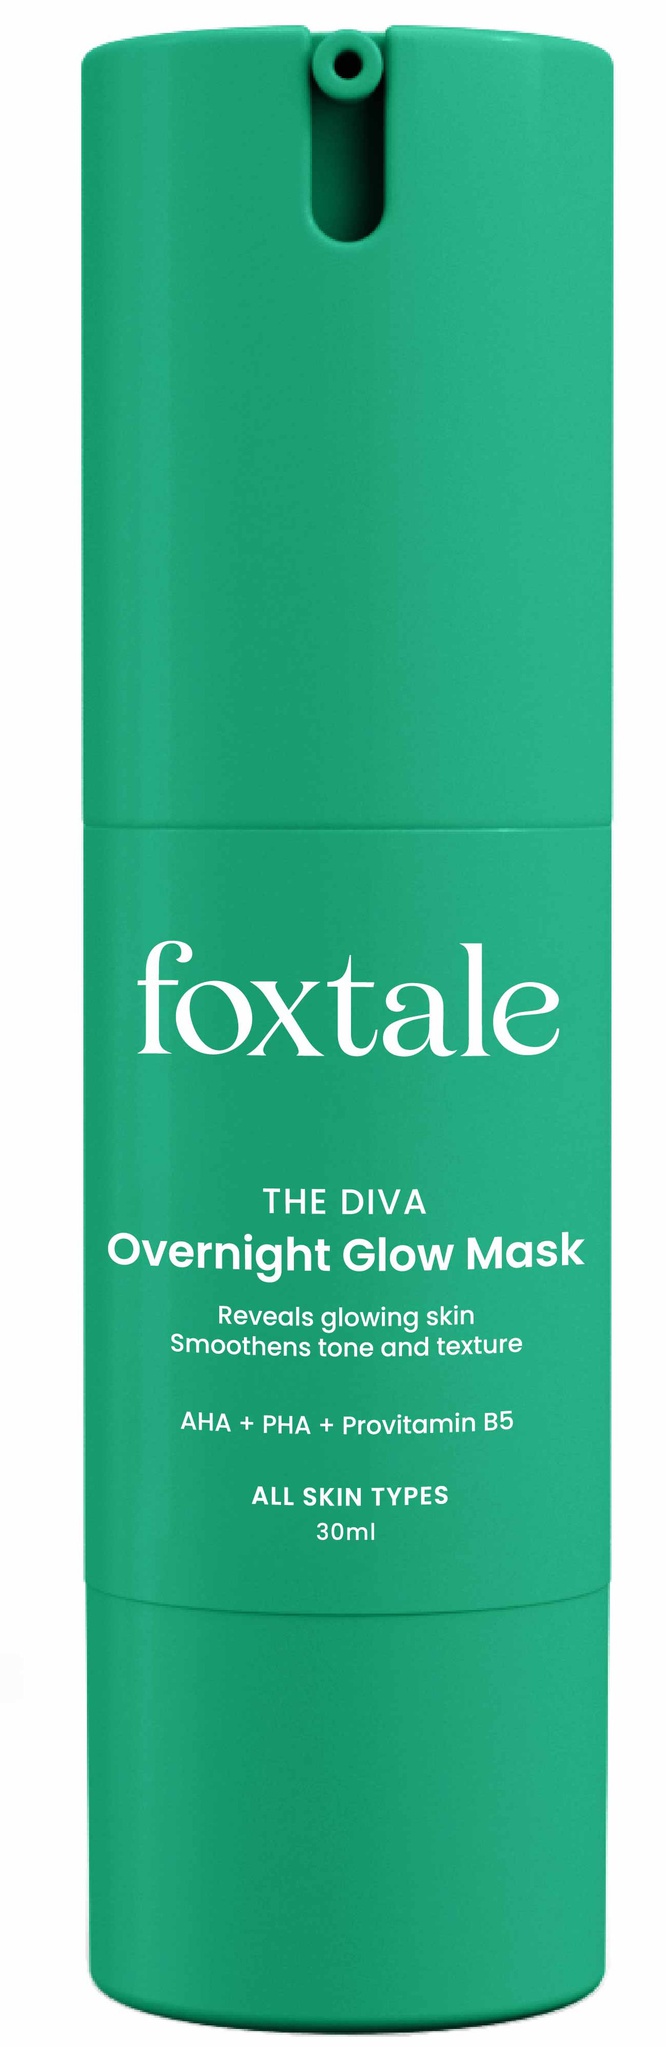 Foxtale The Diva Overnight Glow Mask